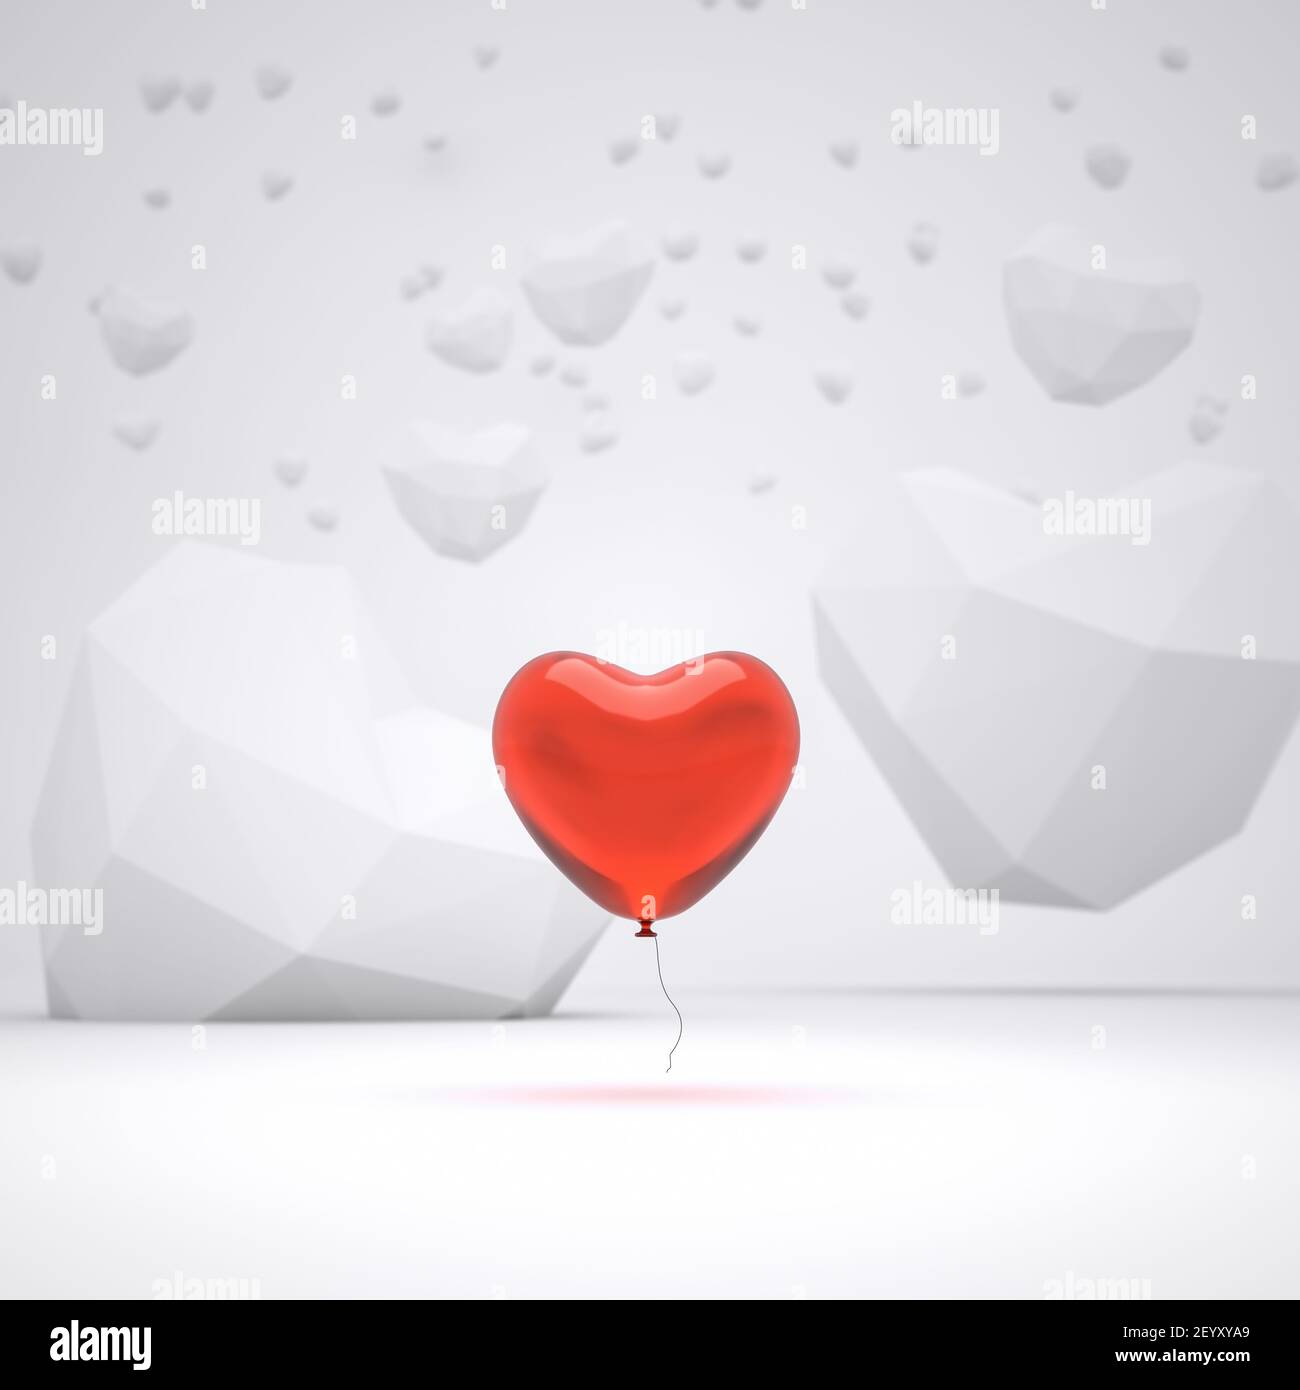 Heart shaped balloon at abstract lowpoly field Stock Photo